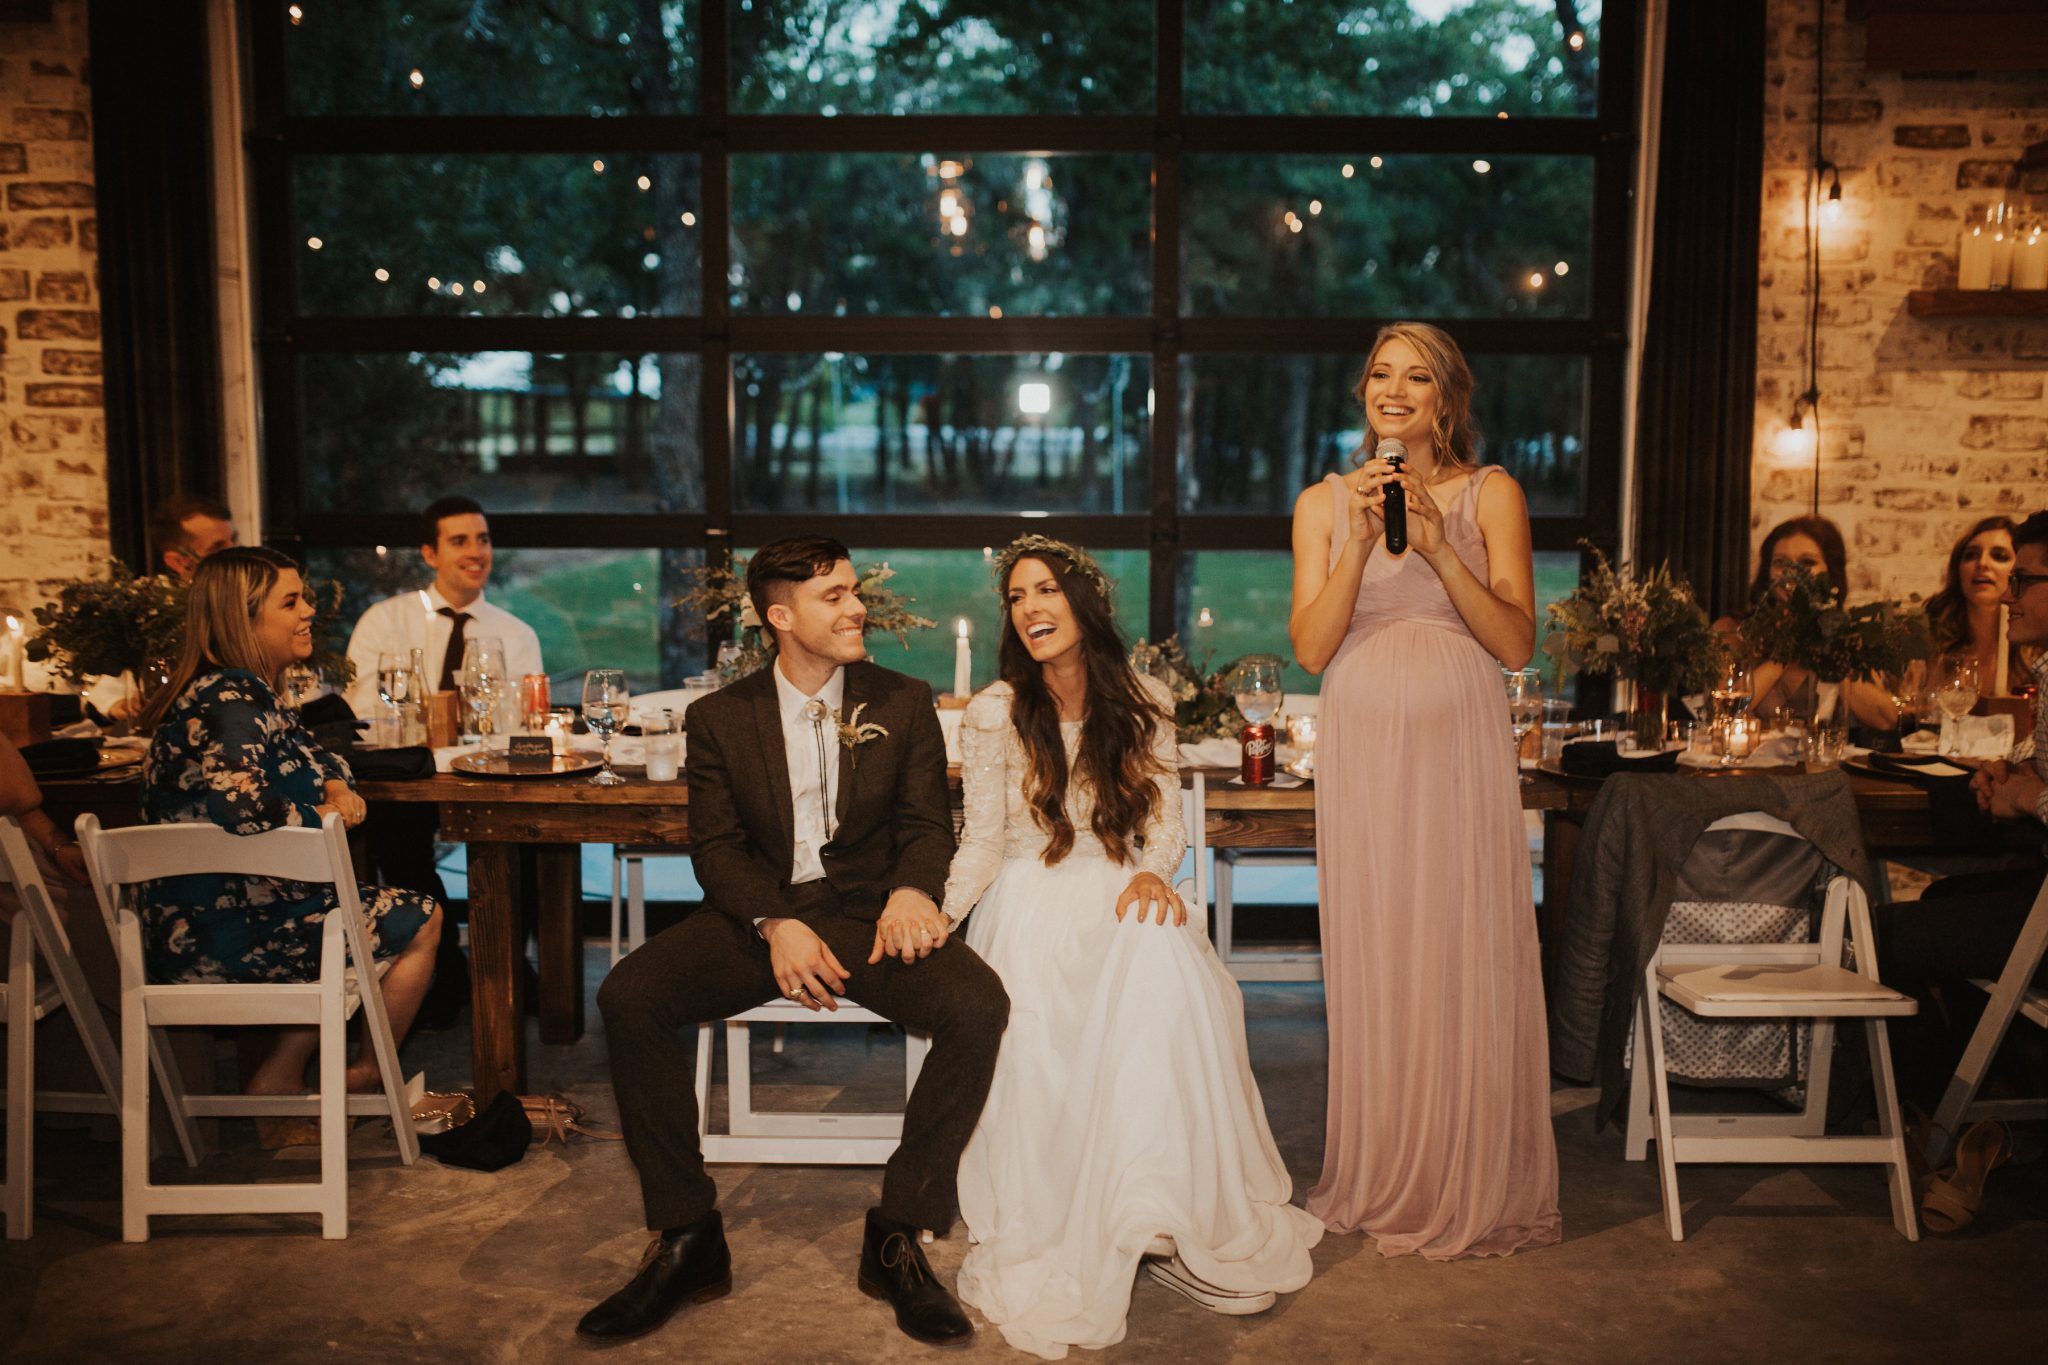 A bridesmaid gives a speech at the indoor barn wedding reception